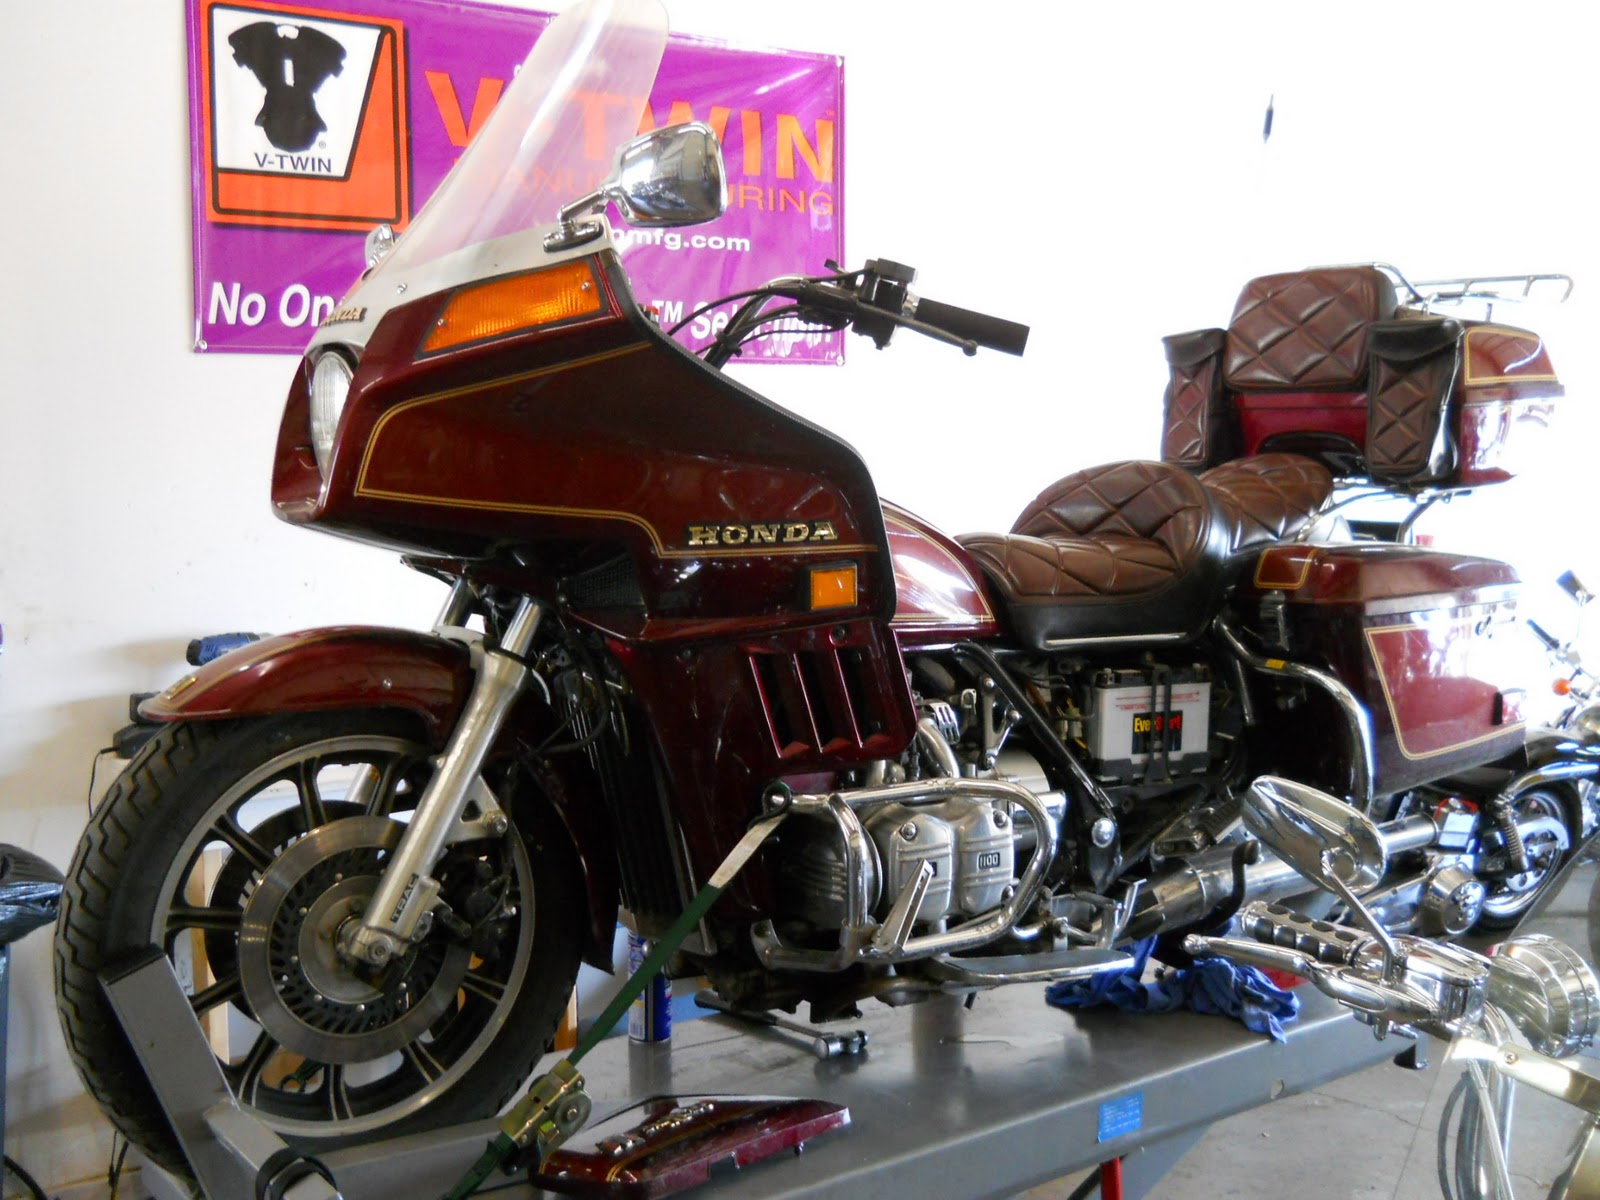  Harley Davidson Careers 